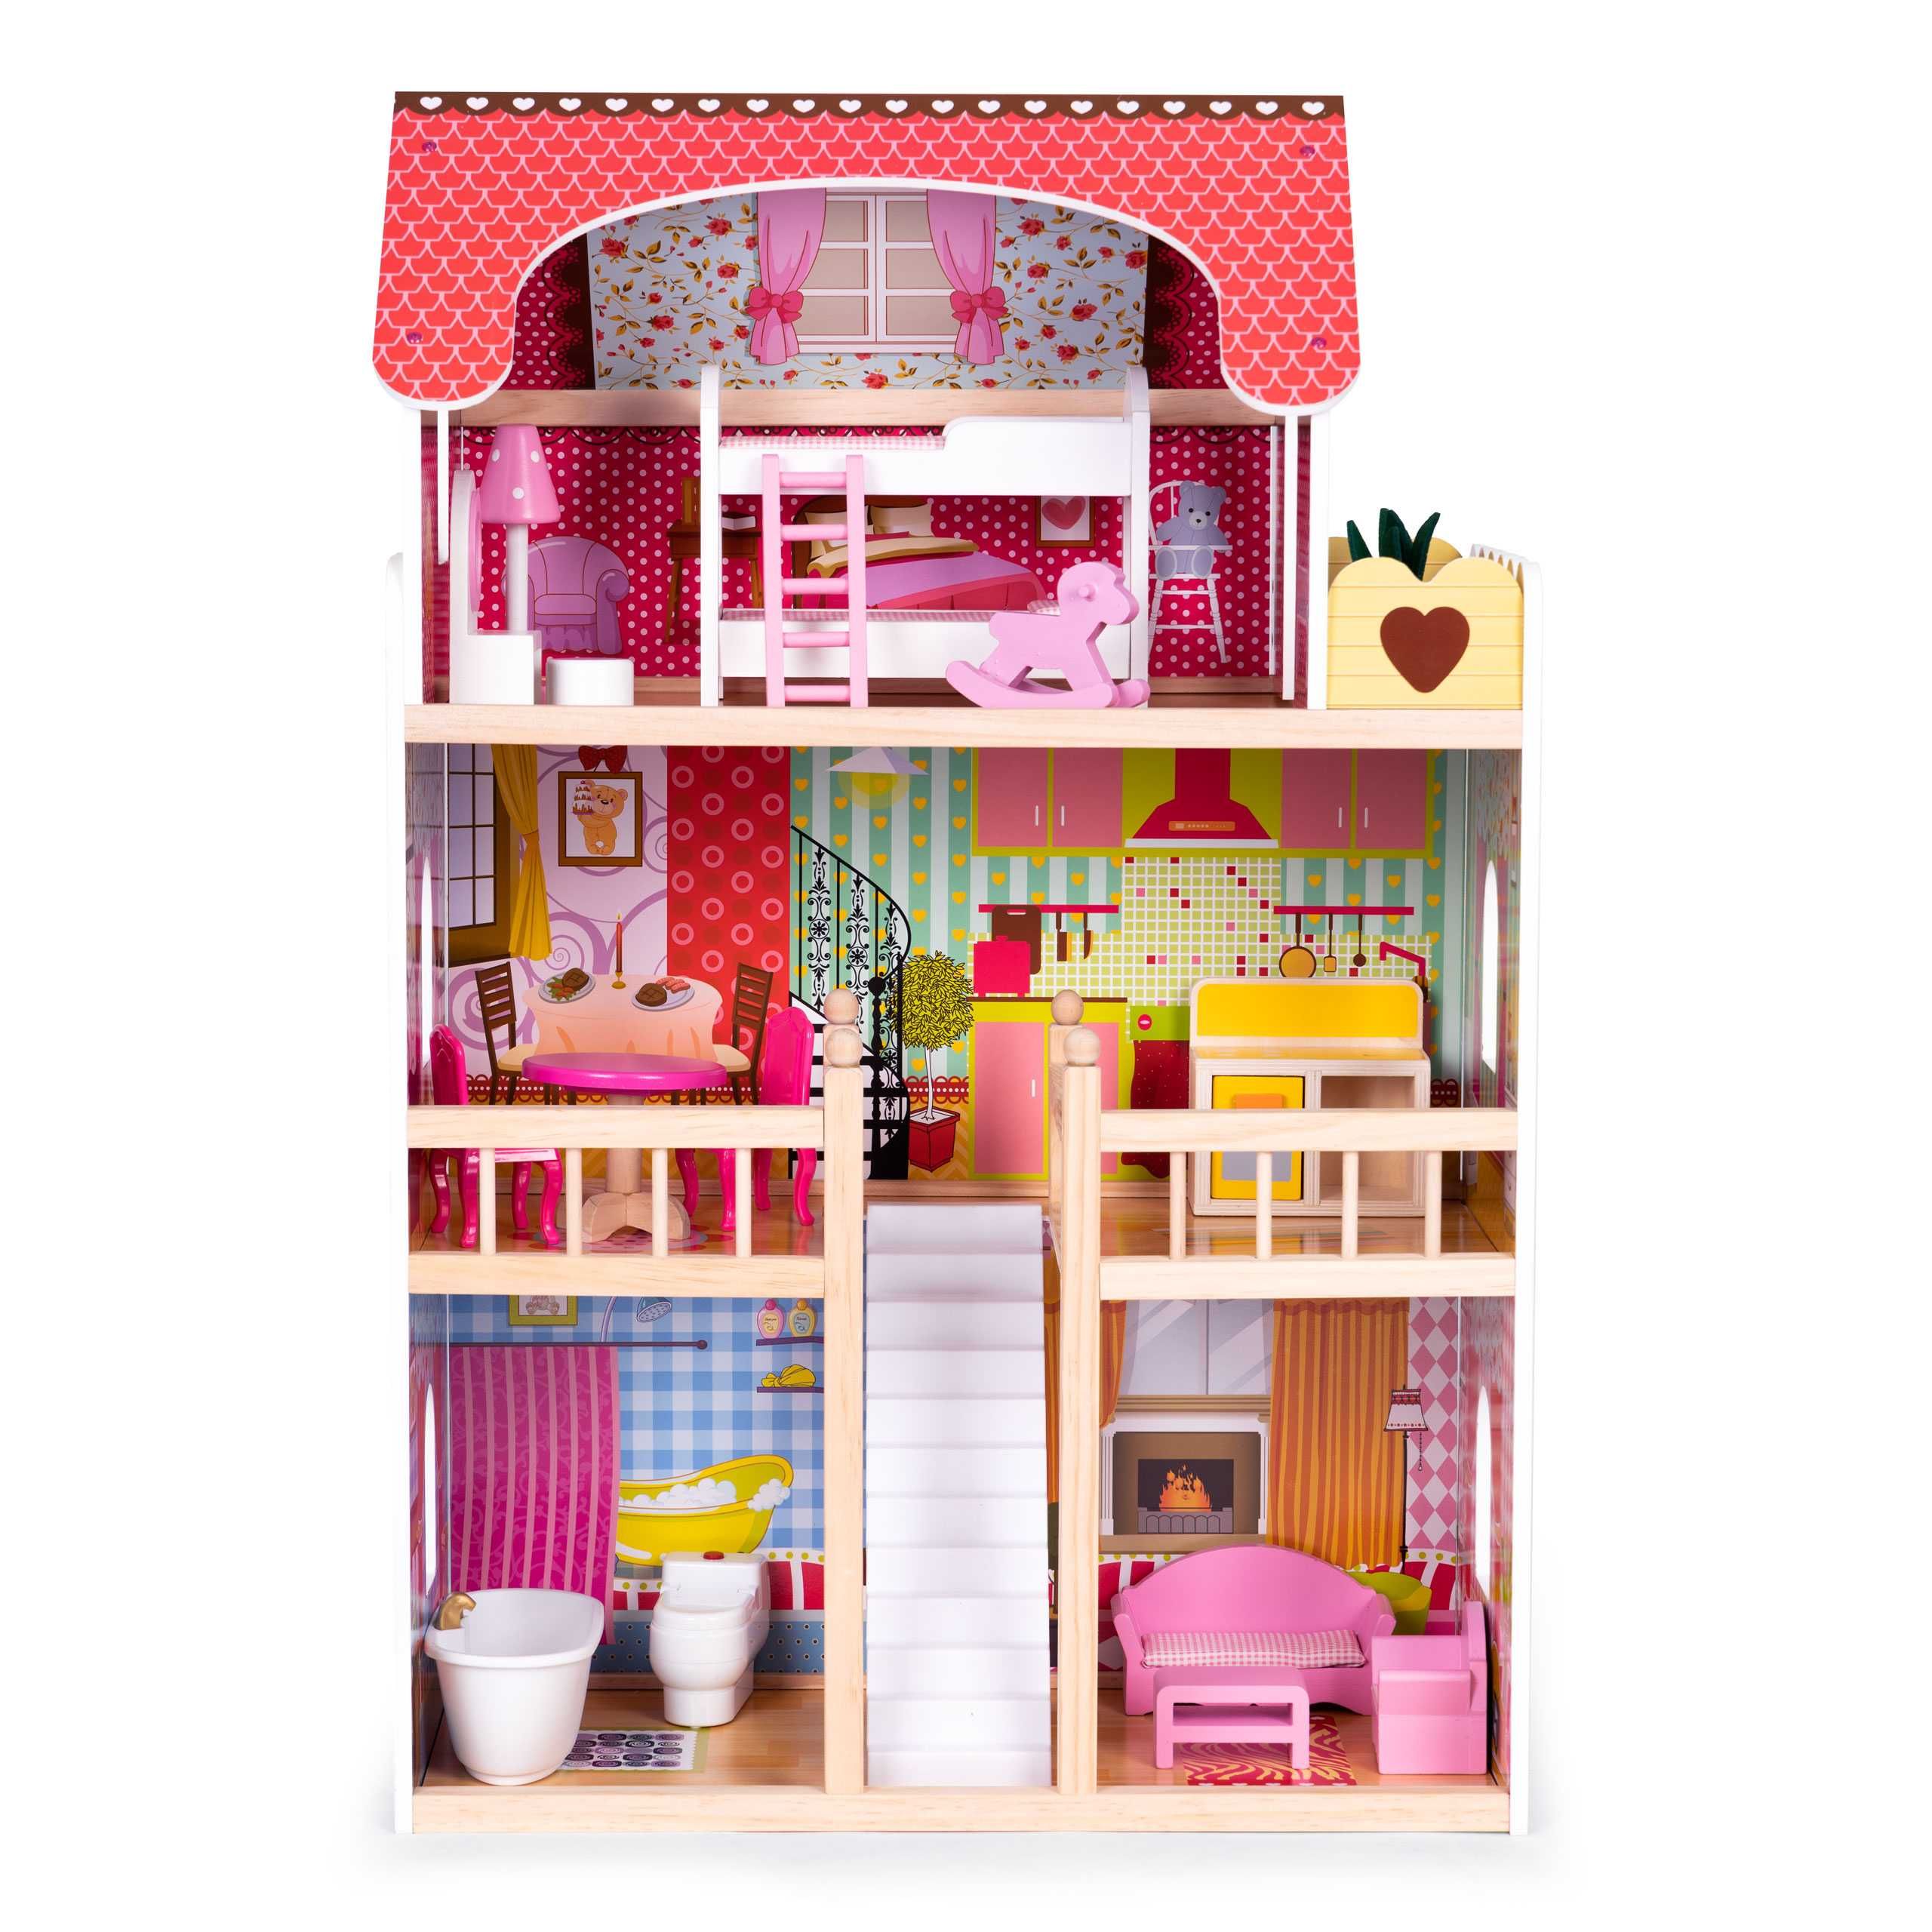 Drewniany domek dla lalek mebelki 3 piętra ECOTOYS #  8209 (4109)